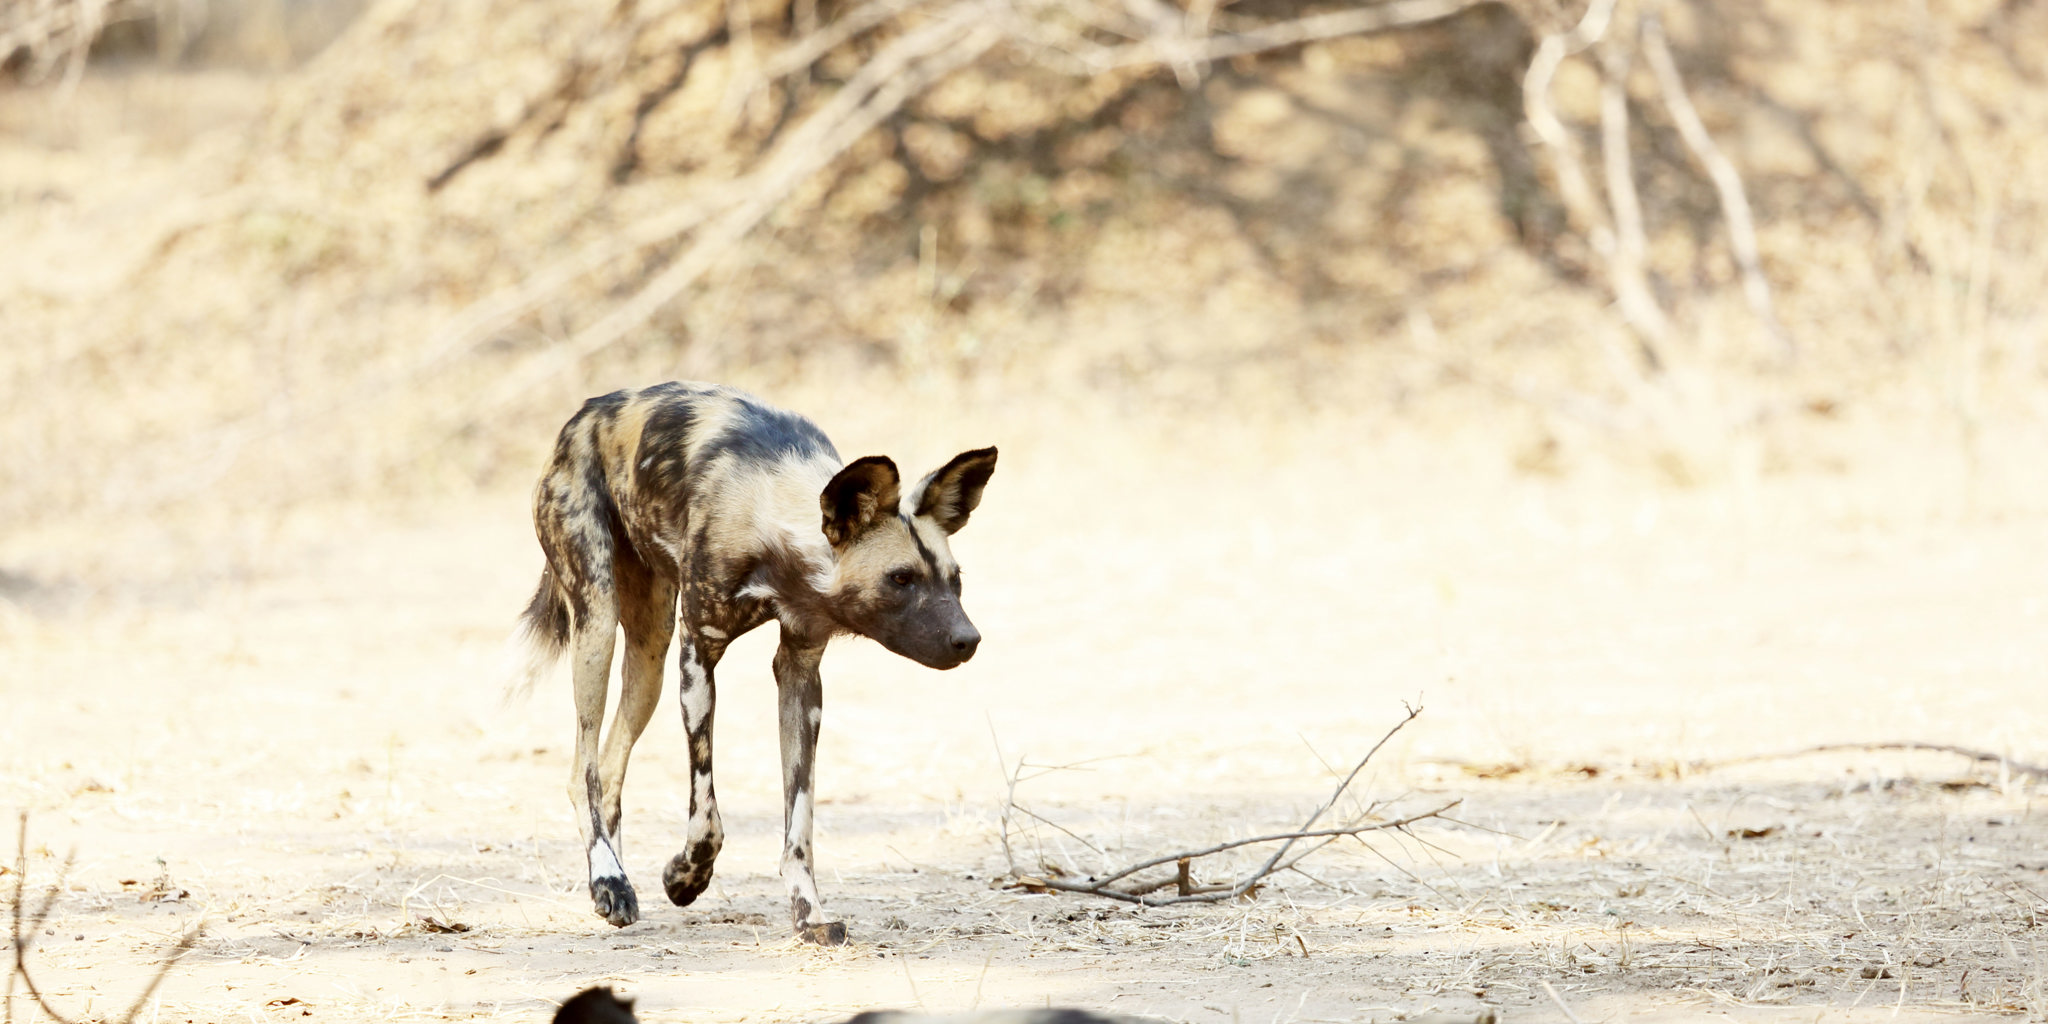 wilddog zambezi expeditions caroline gilbello african bush camps mana pools national park zimbabwe wildlife safari